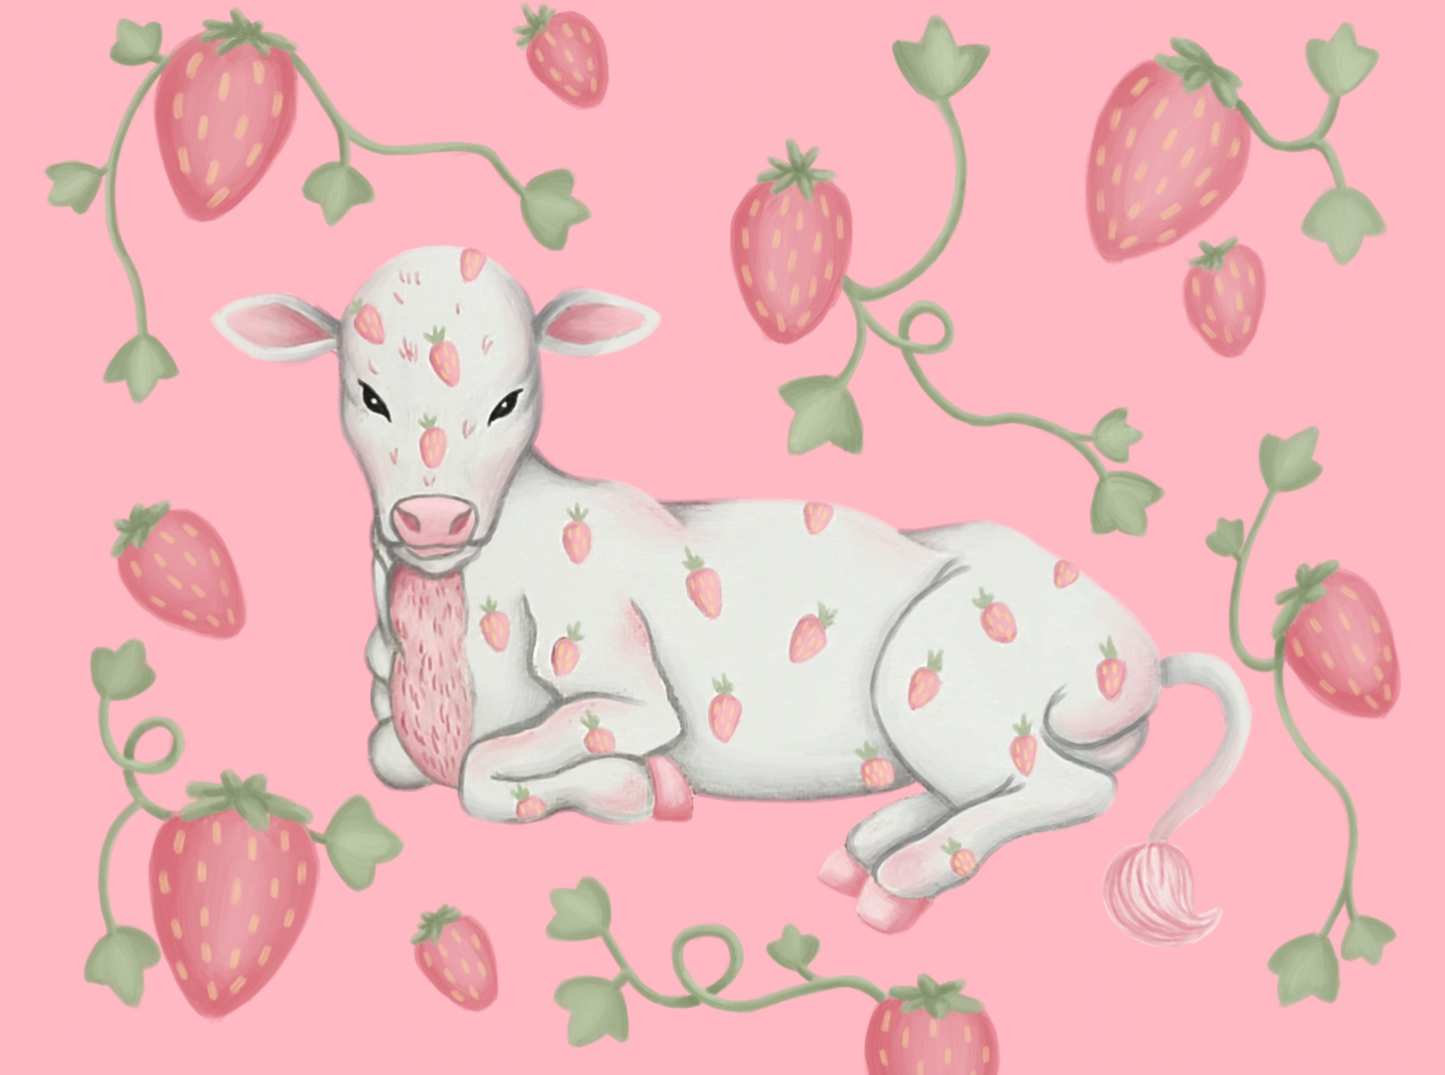 OC] Strawberry cow, art by me :) : r/aww